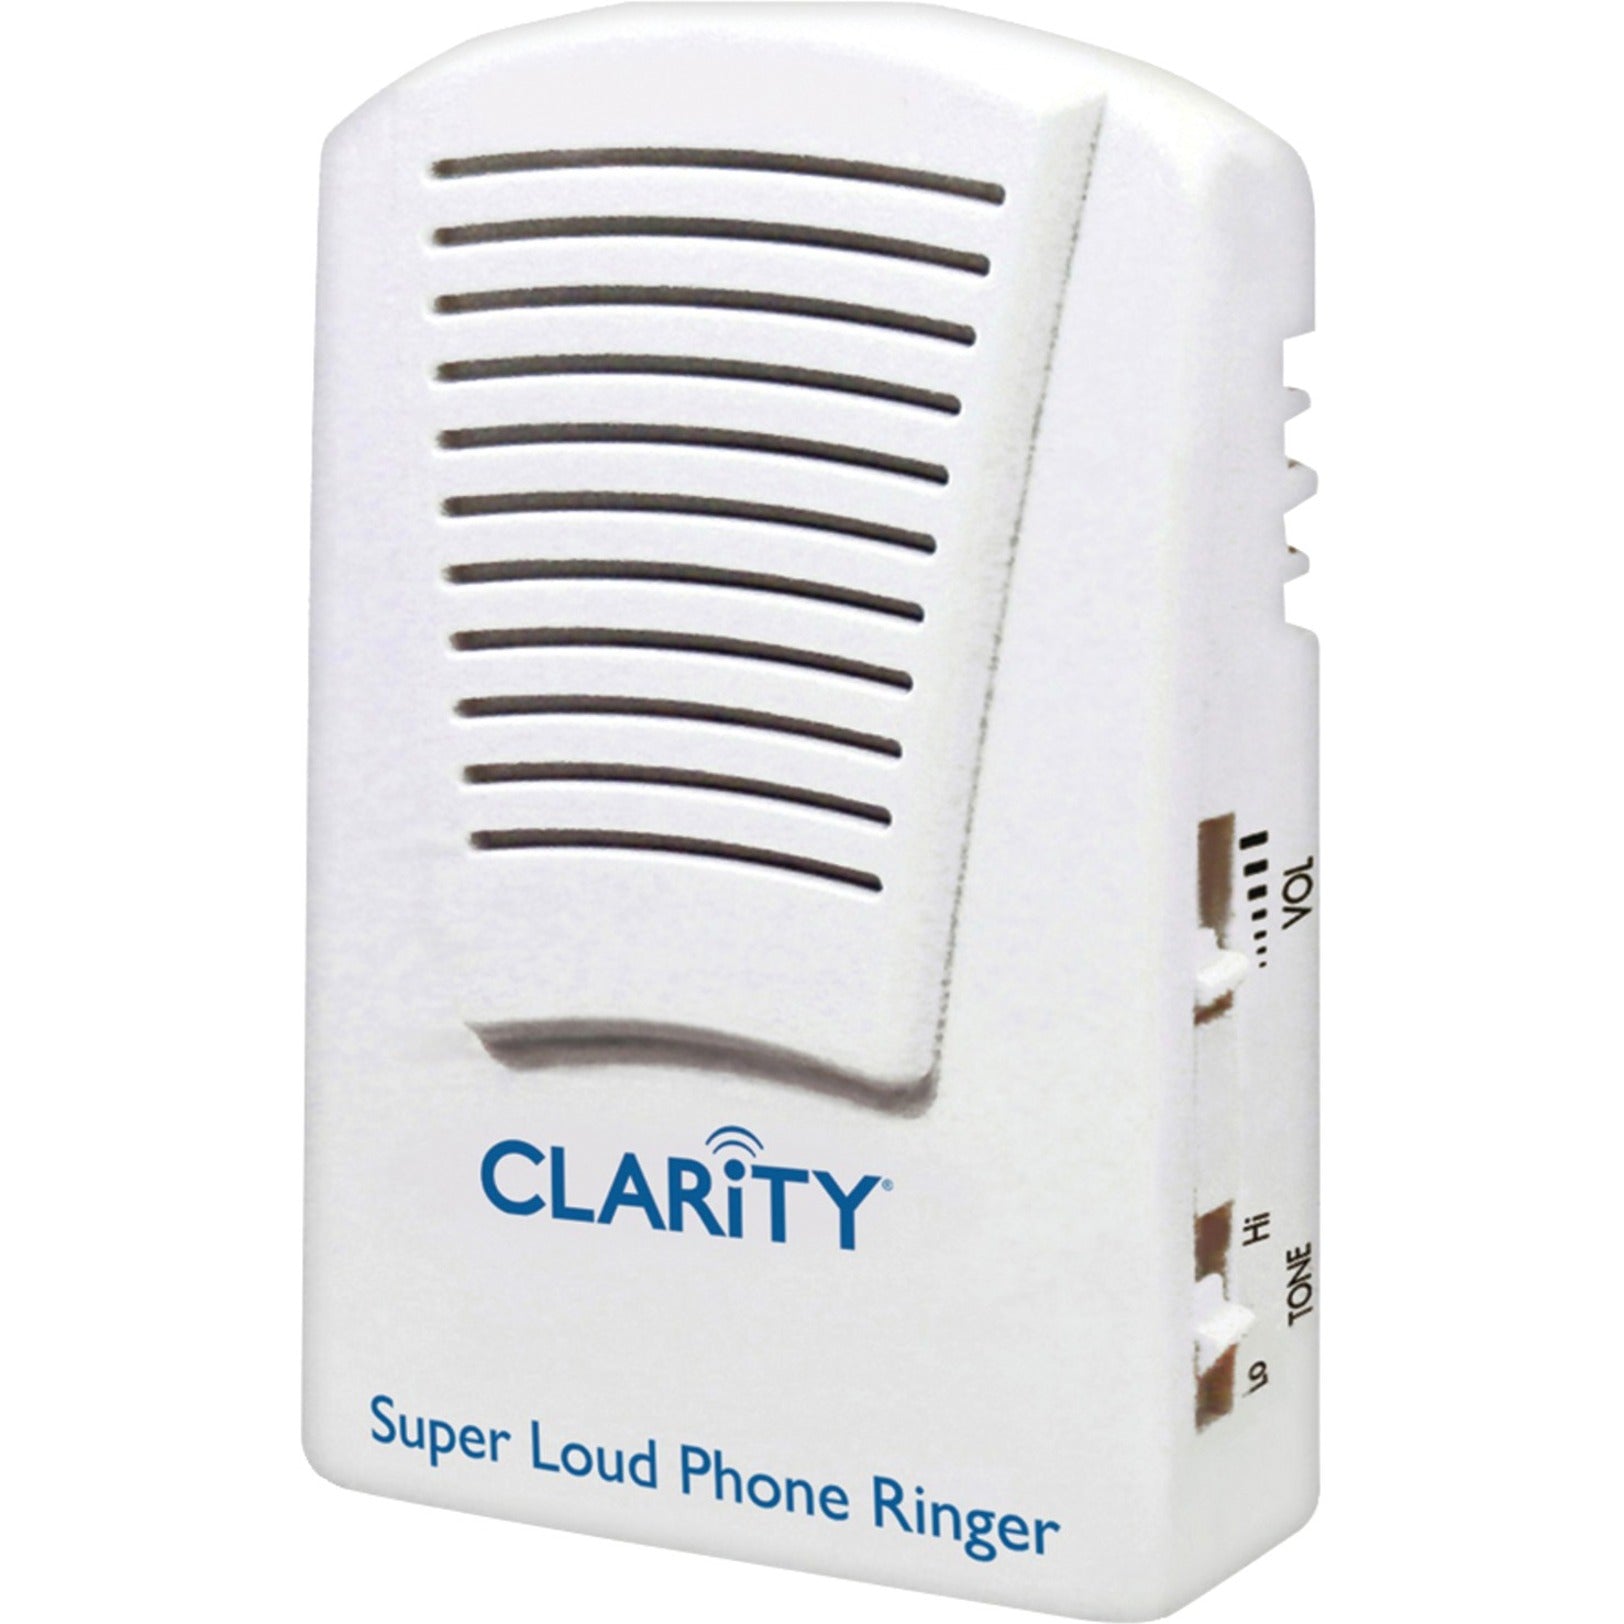 Clarity 55173.000 SR100 Super Loud Phone Ringer, Volume Control, White